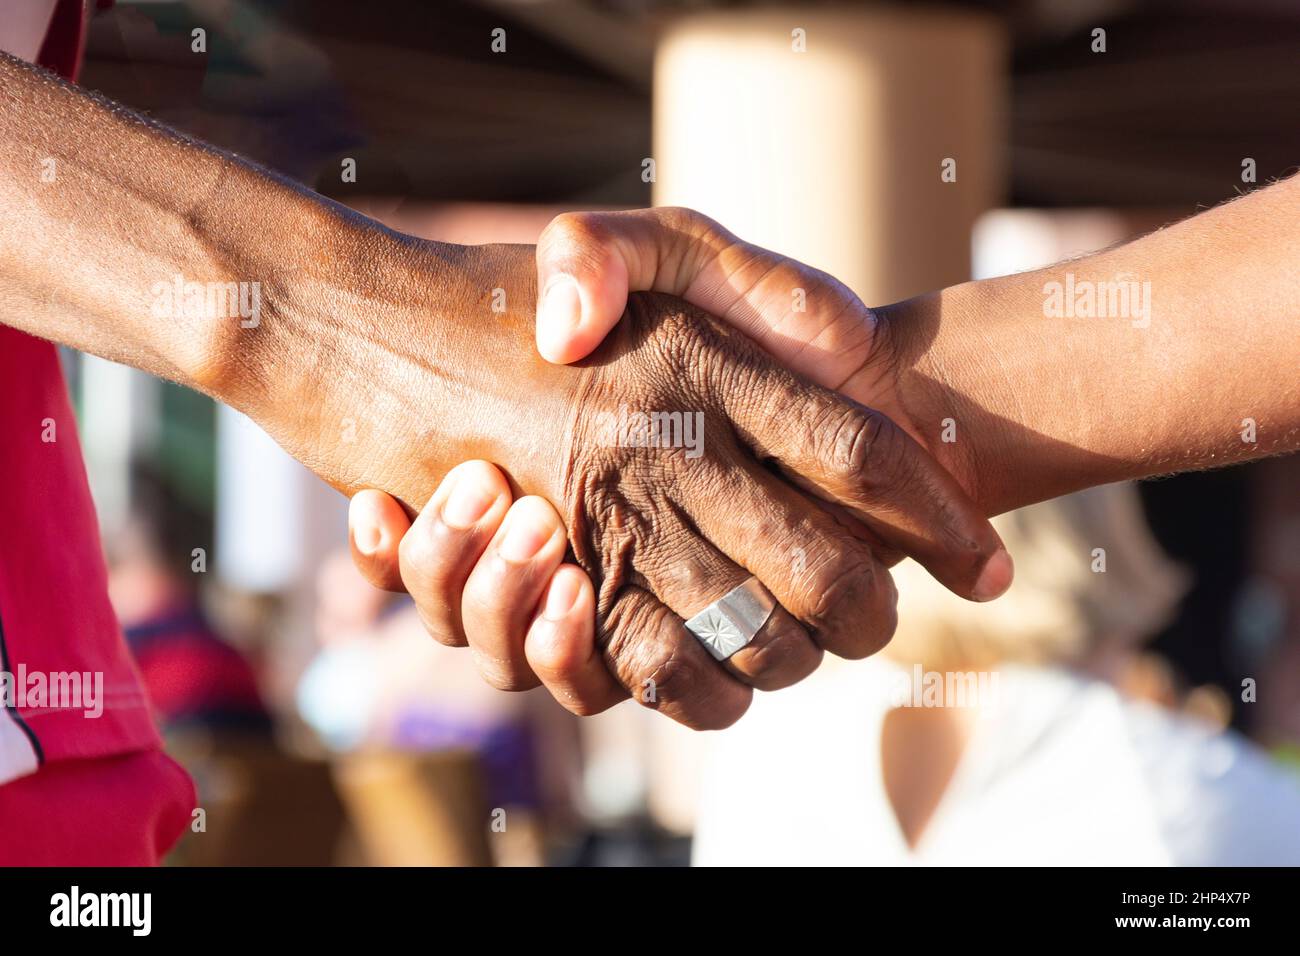 Men shaking hands, Santa Maria, Sal, República de Cabo (Cape Verde) Stock Photo